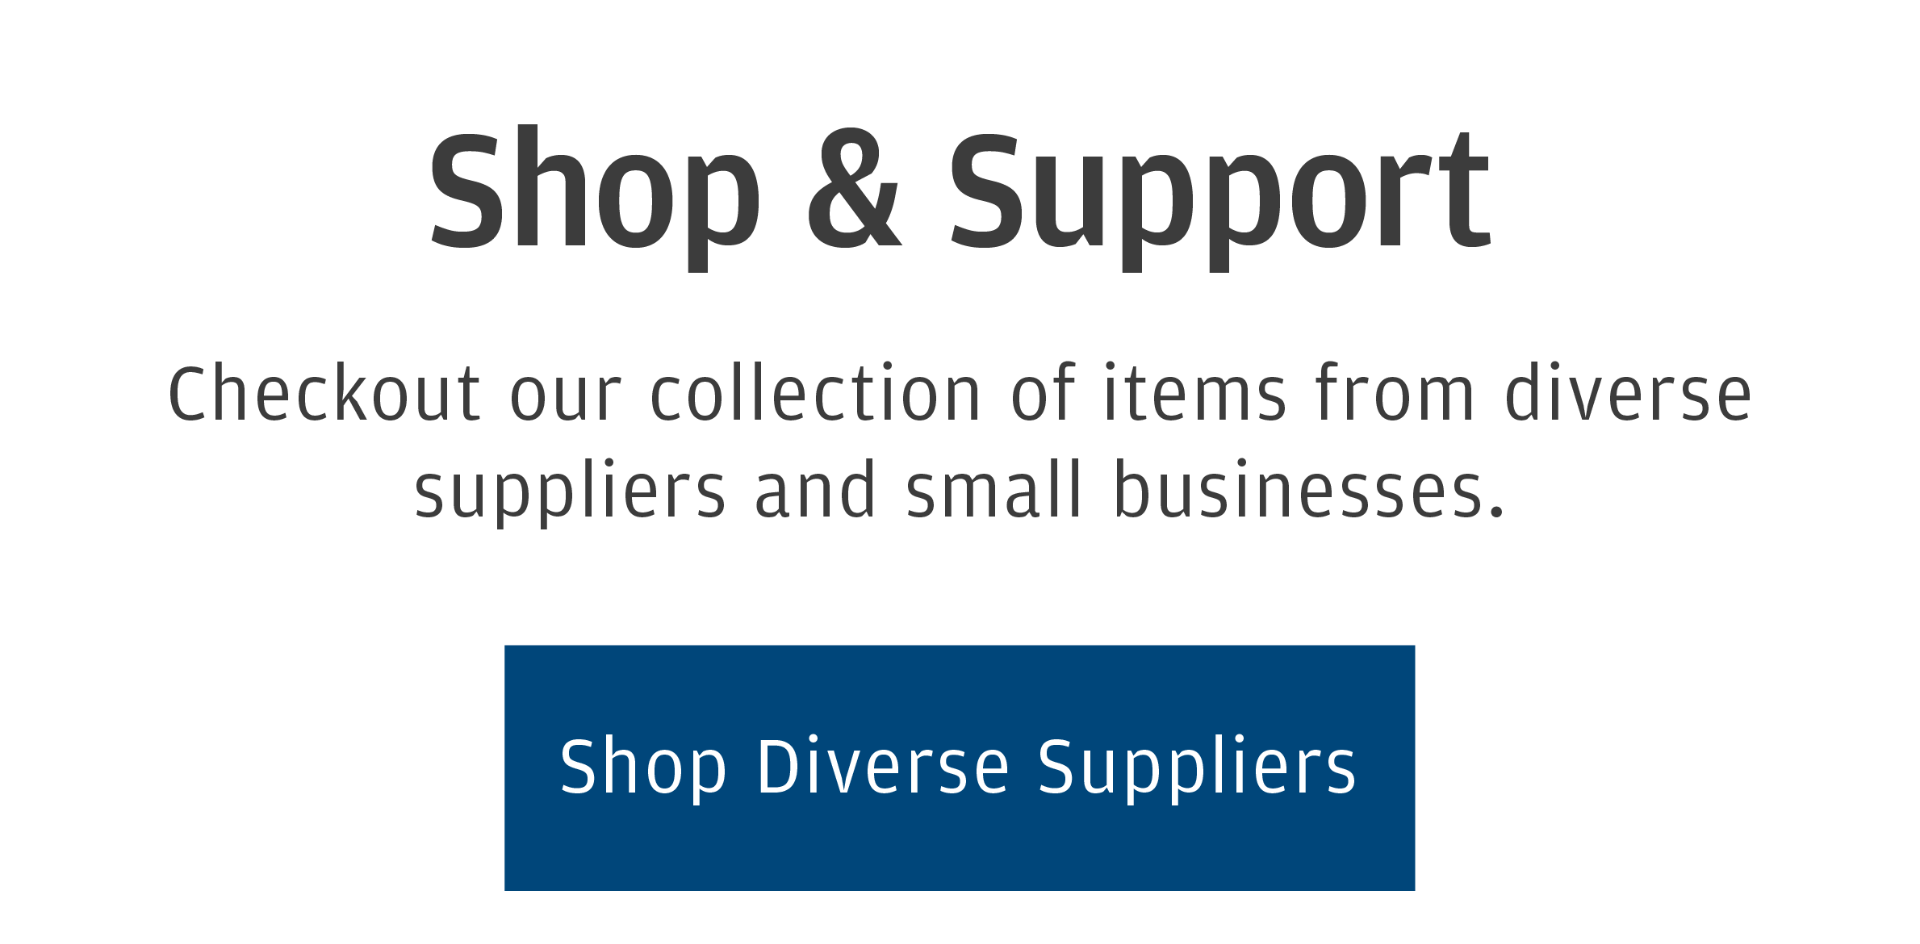 Shop & Support Diverse Suppliers